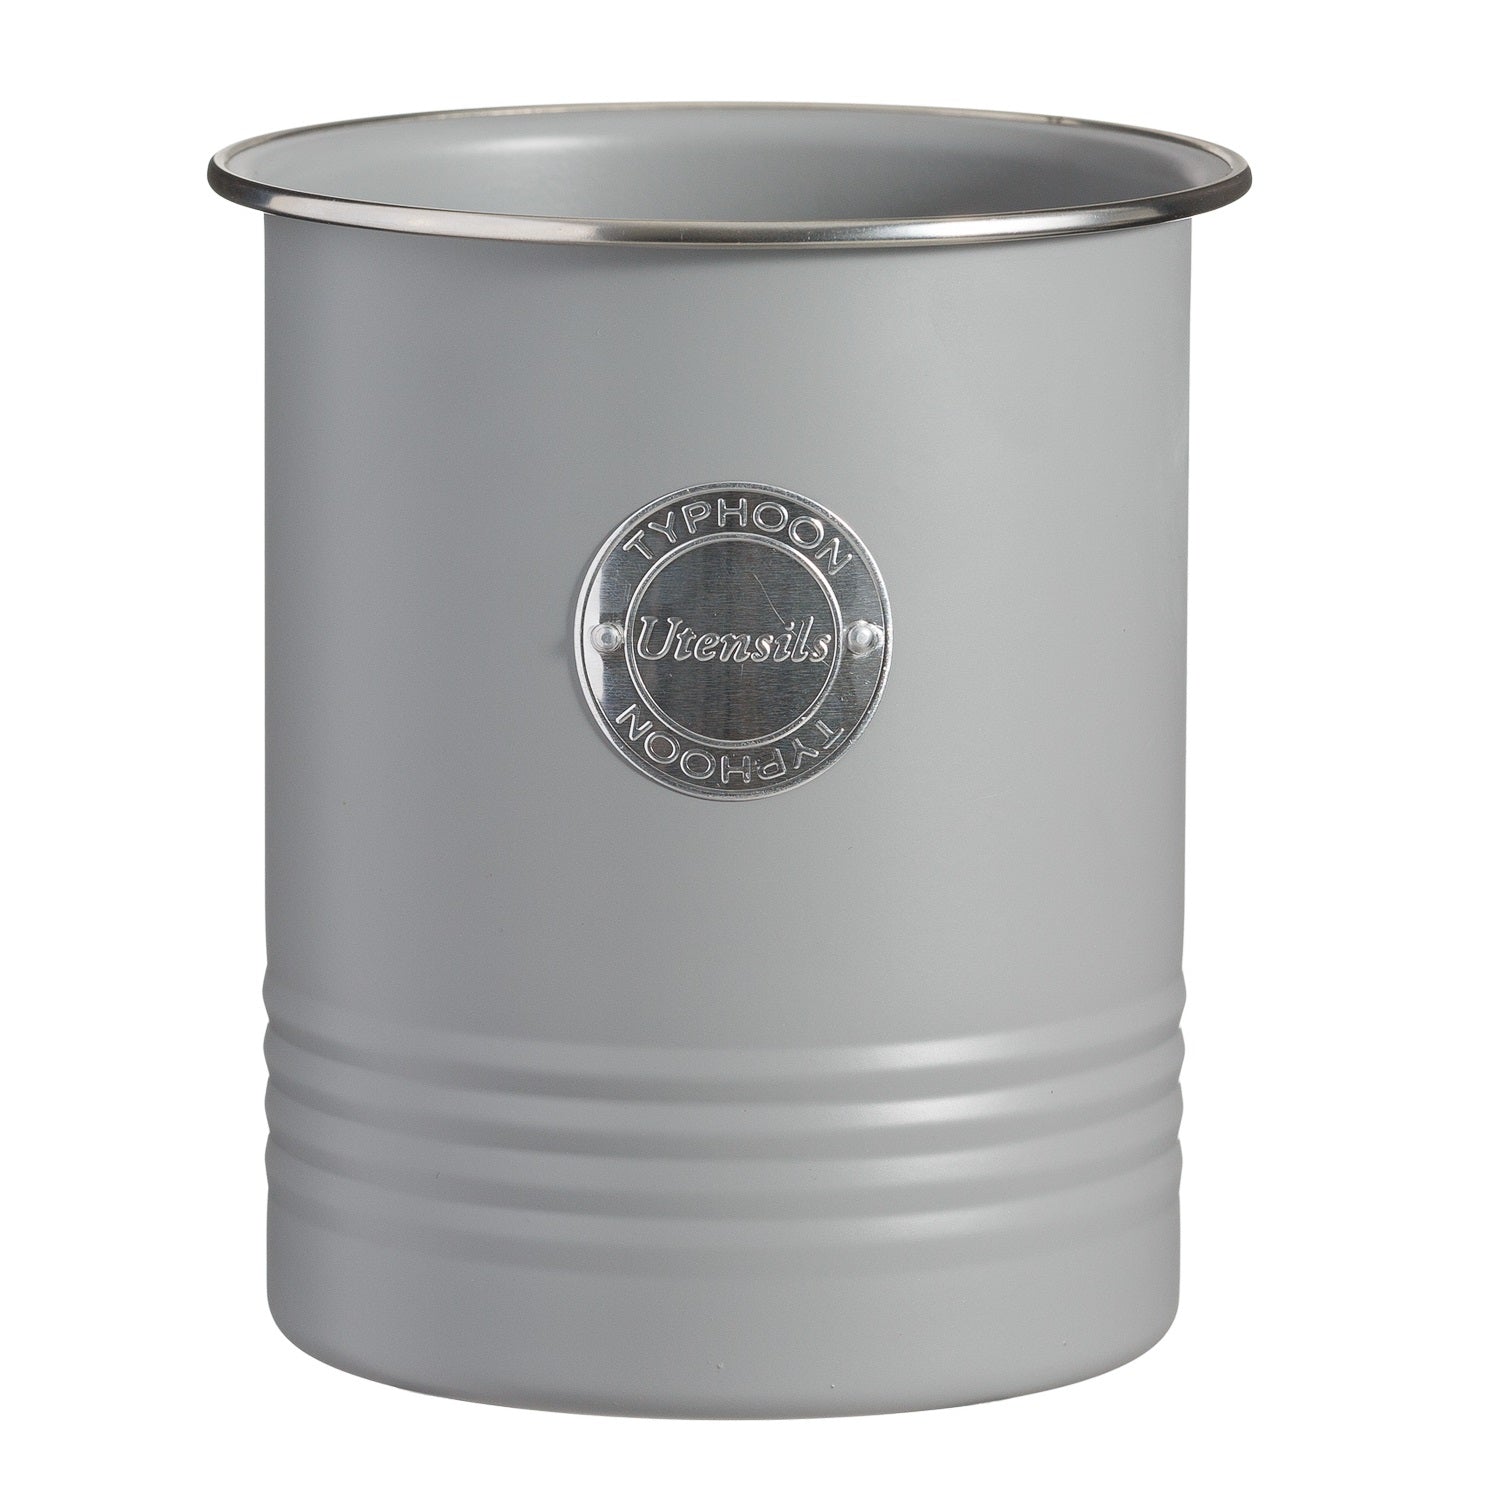 Typhoon 1400.736 Living Utensils Pot - Grey - Premium Utensil Holders from Typhoon - Just $9.5! Shop now at W Hurst & Son (IW) Ltd